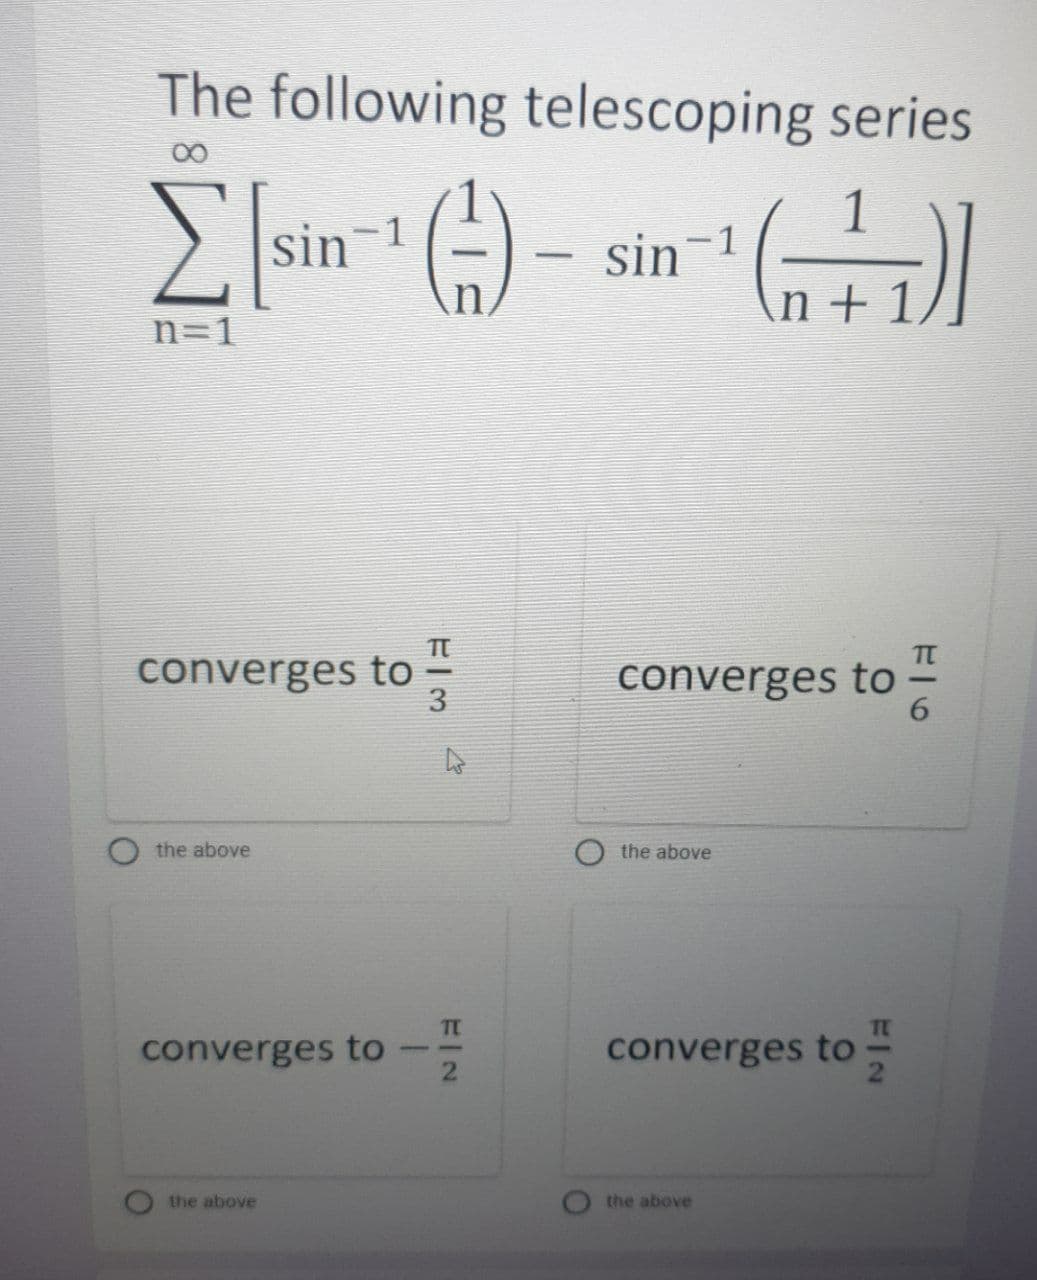 The following telescoping series
E sin
1
1
sin-
n + 1,
n=1
TC
converges to
3
converges to
the above
the above
TE
converges to
converges to
the above
the above
